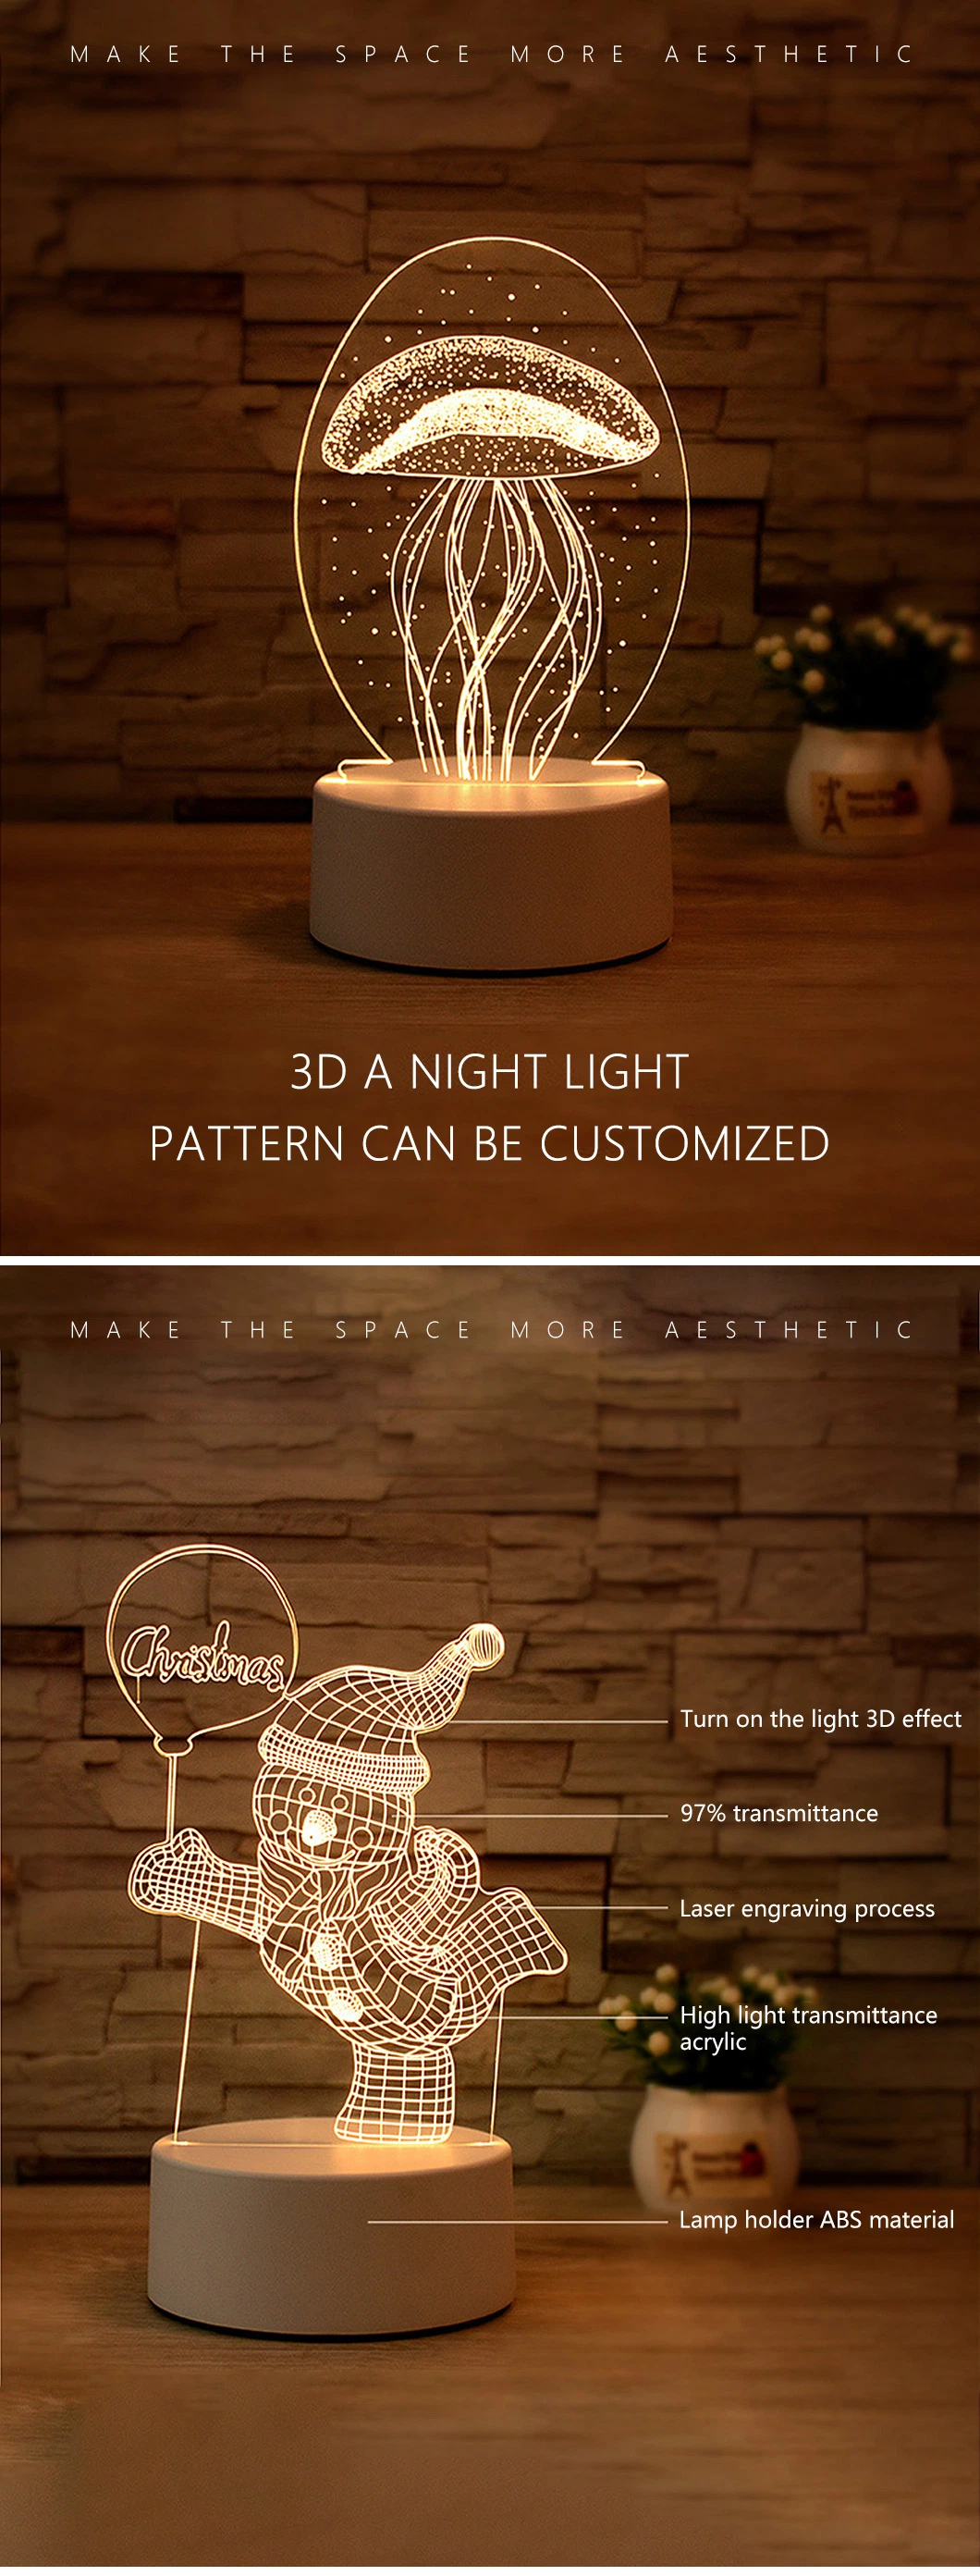 Wholesale Acrylic LED Base 3D Night Light lamp Illusion 3D Anime Lamparas Acrylic Table Desk Base LED Christmas Lamp Kids Room Decor Star Wars Table Lamp